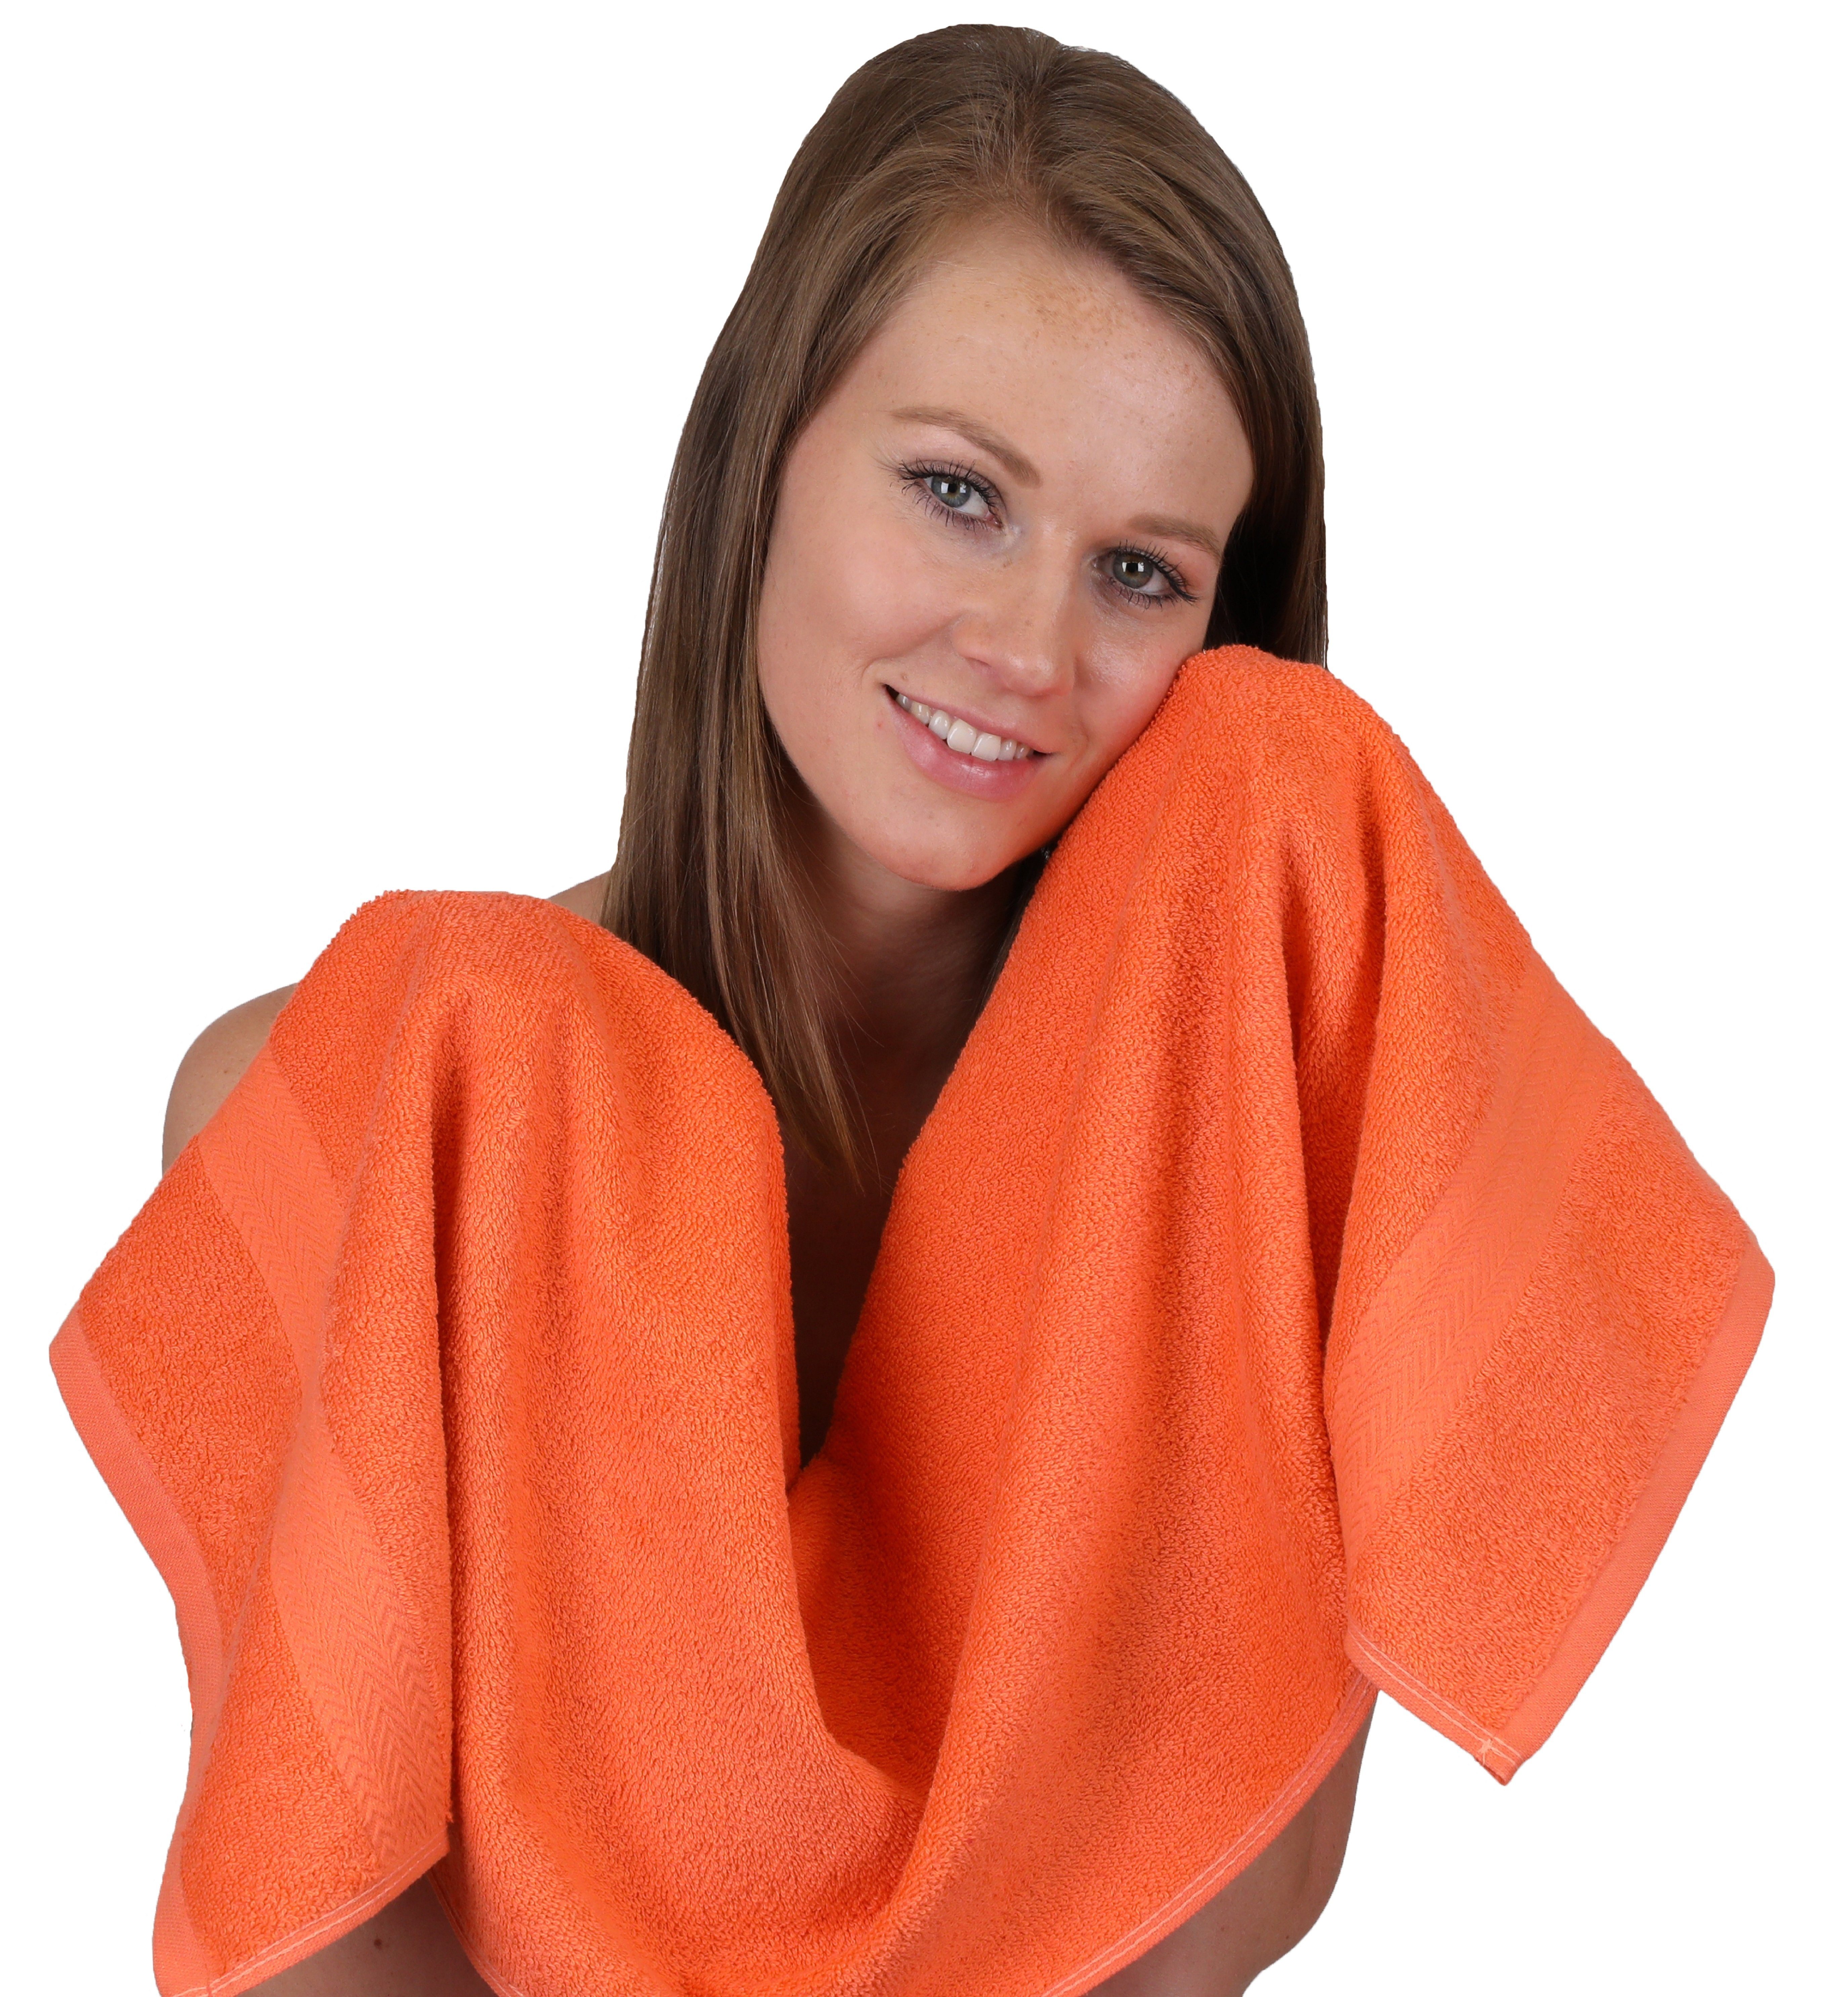 Betz Handtuch Set 12-TLG. Handtuch 2 Baumwolle, 2 2 Farbe Set 2 blutorange/rubinrot, 4 Premium 100% (12-tlg) Handtücher 100% Gästetücher Seiftücher Baumwolle Waschhandschuhe Duschtücher